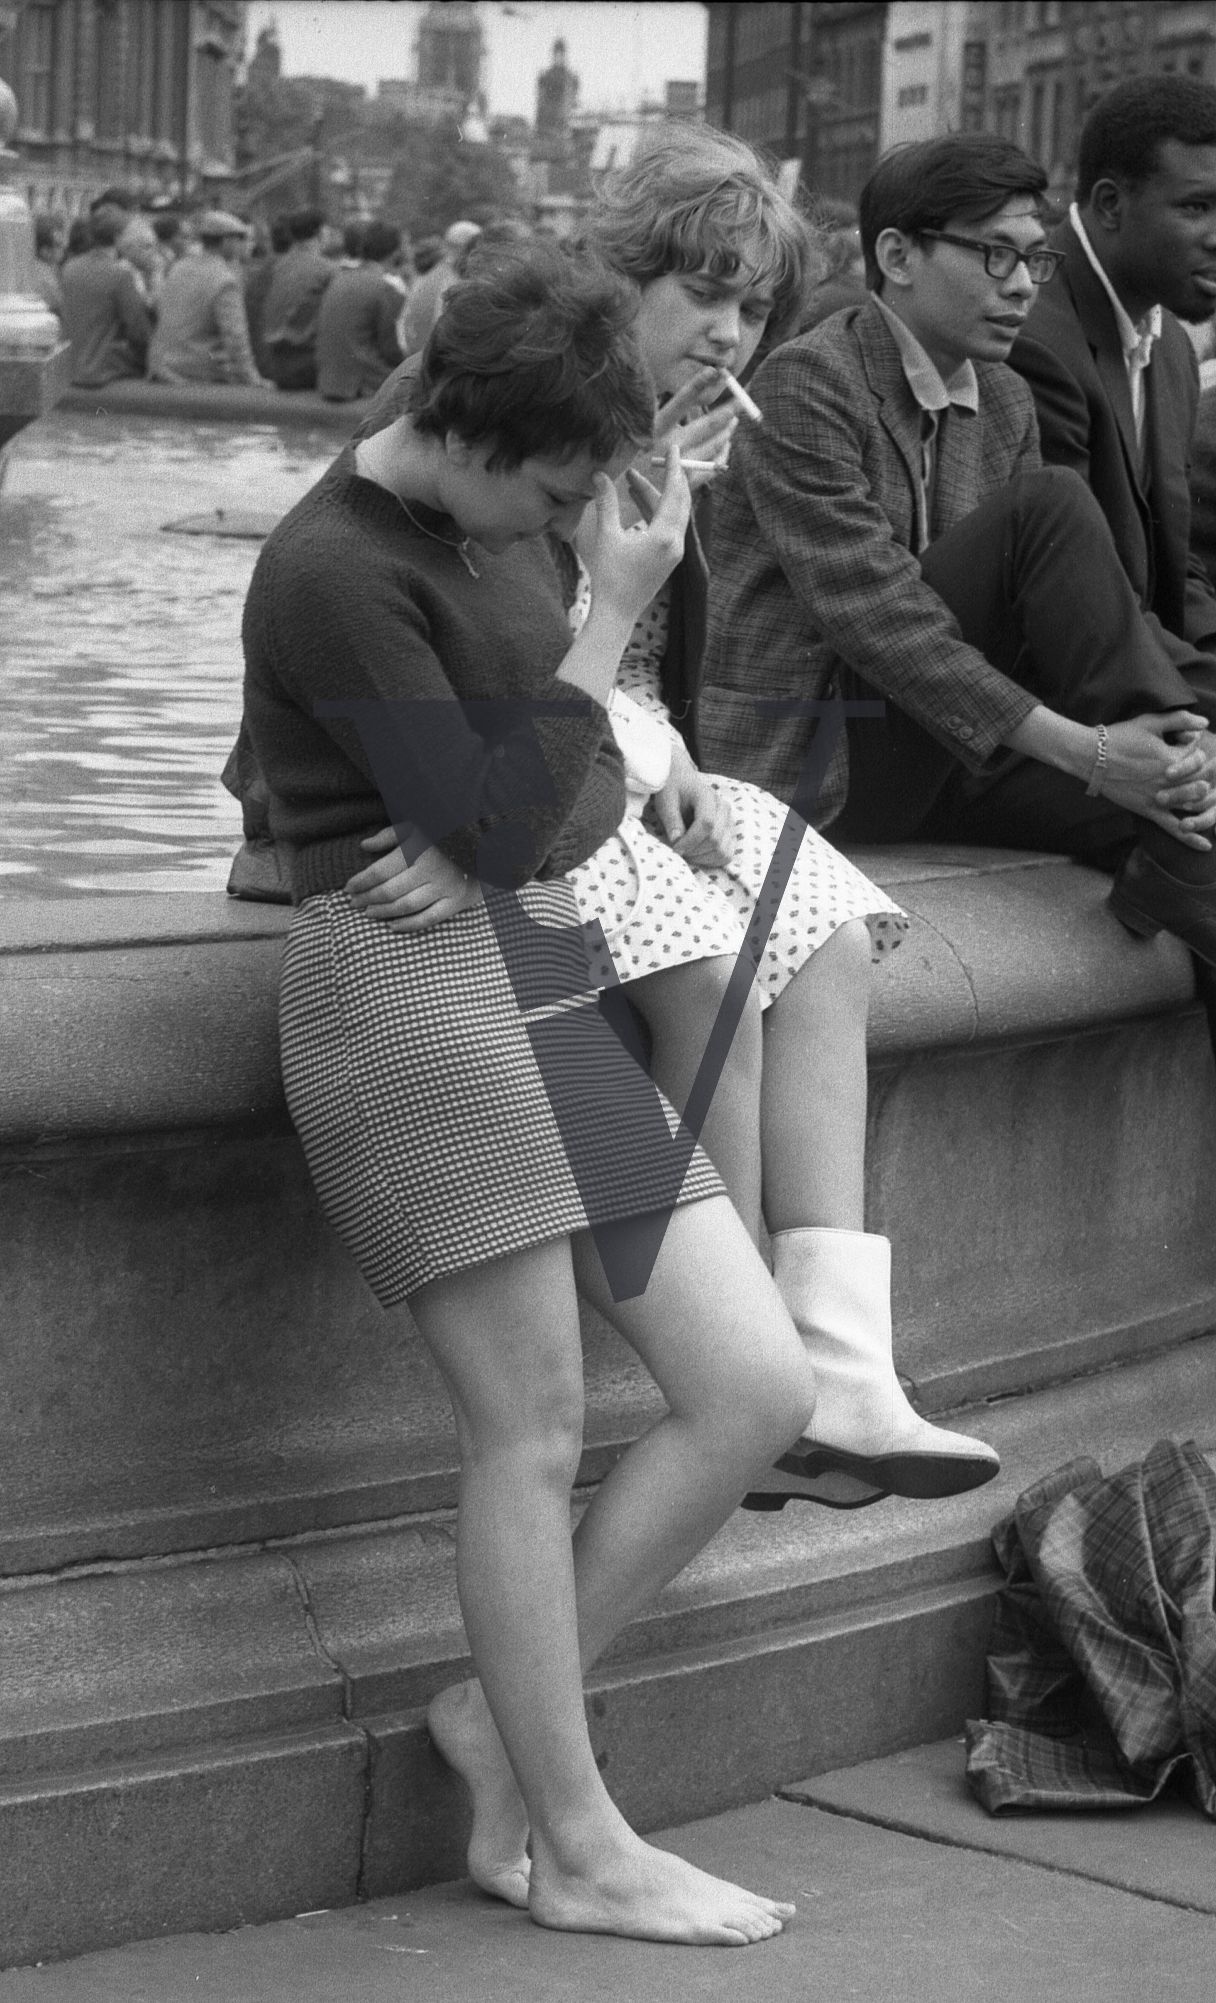 London, Sixties, women smoke cigarettes, Trafalgar Square.